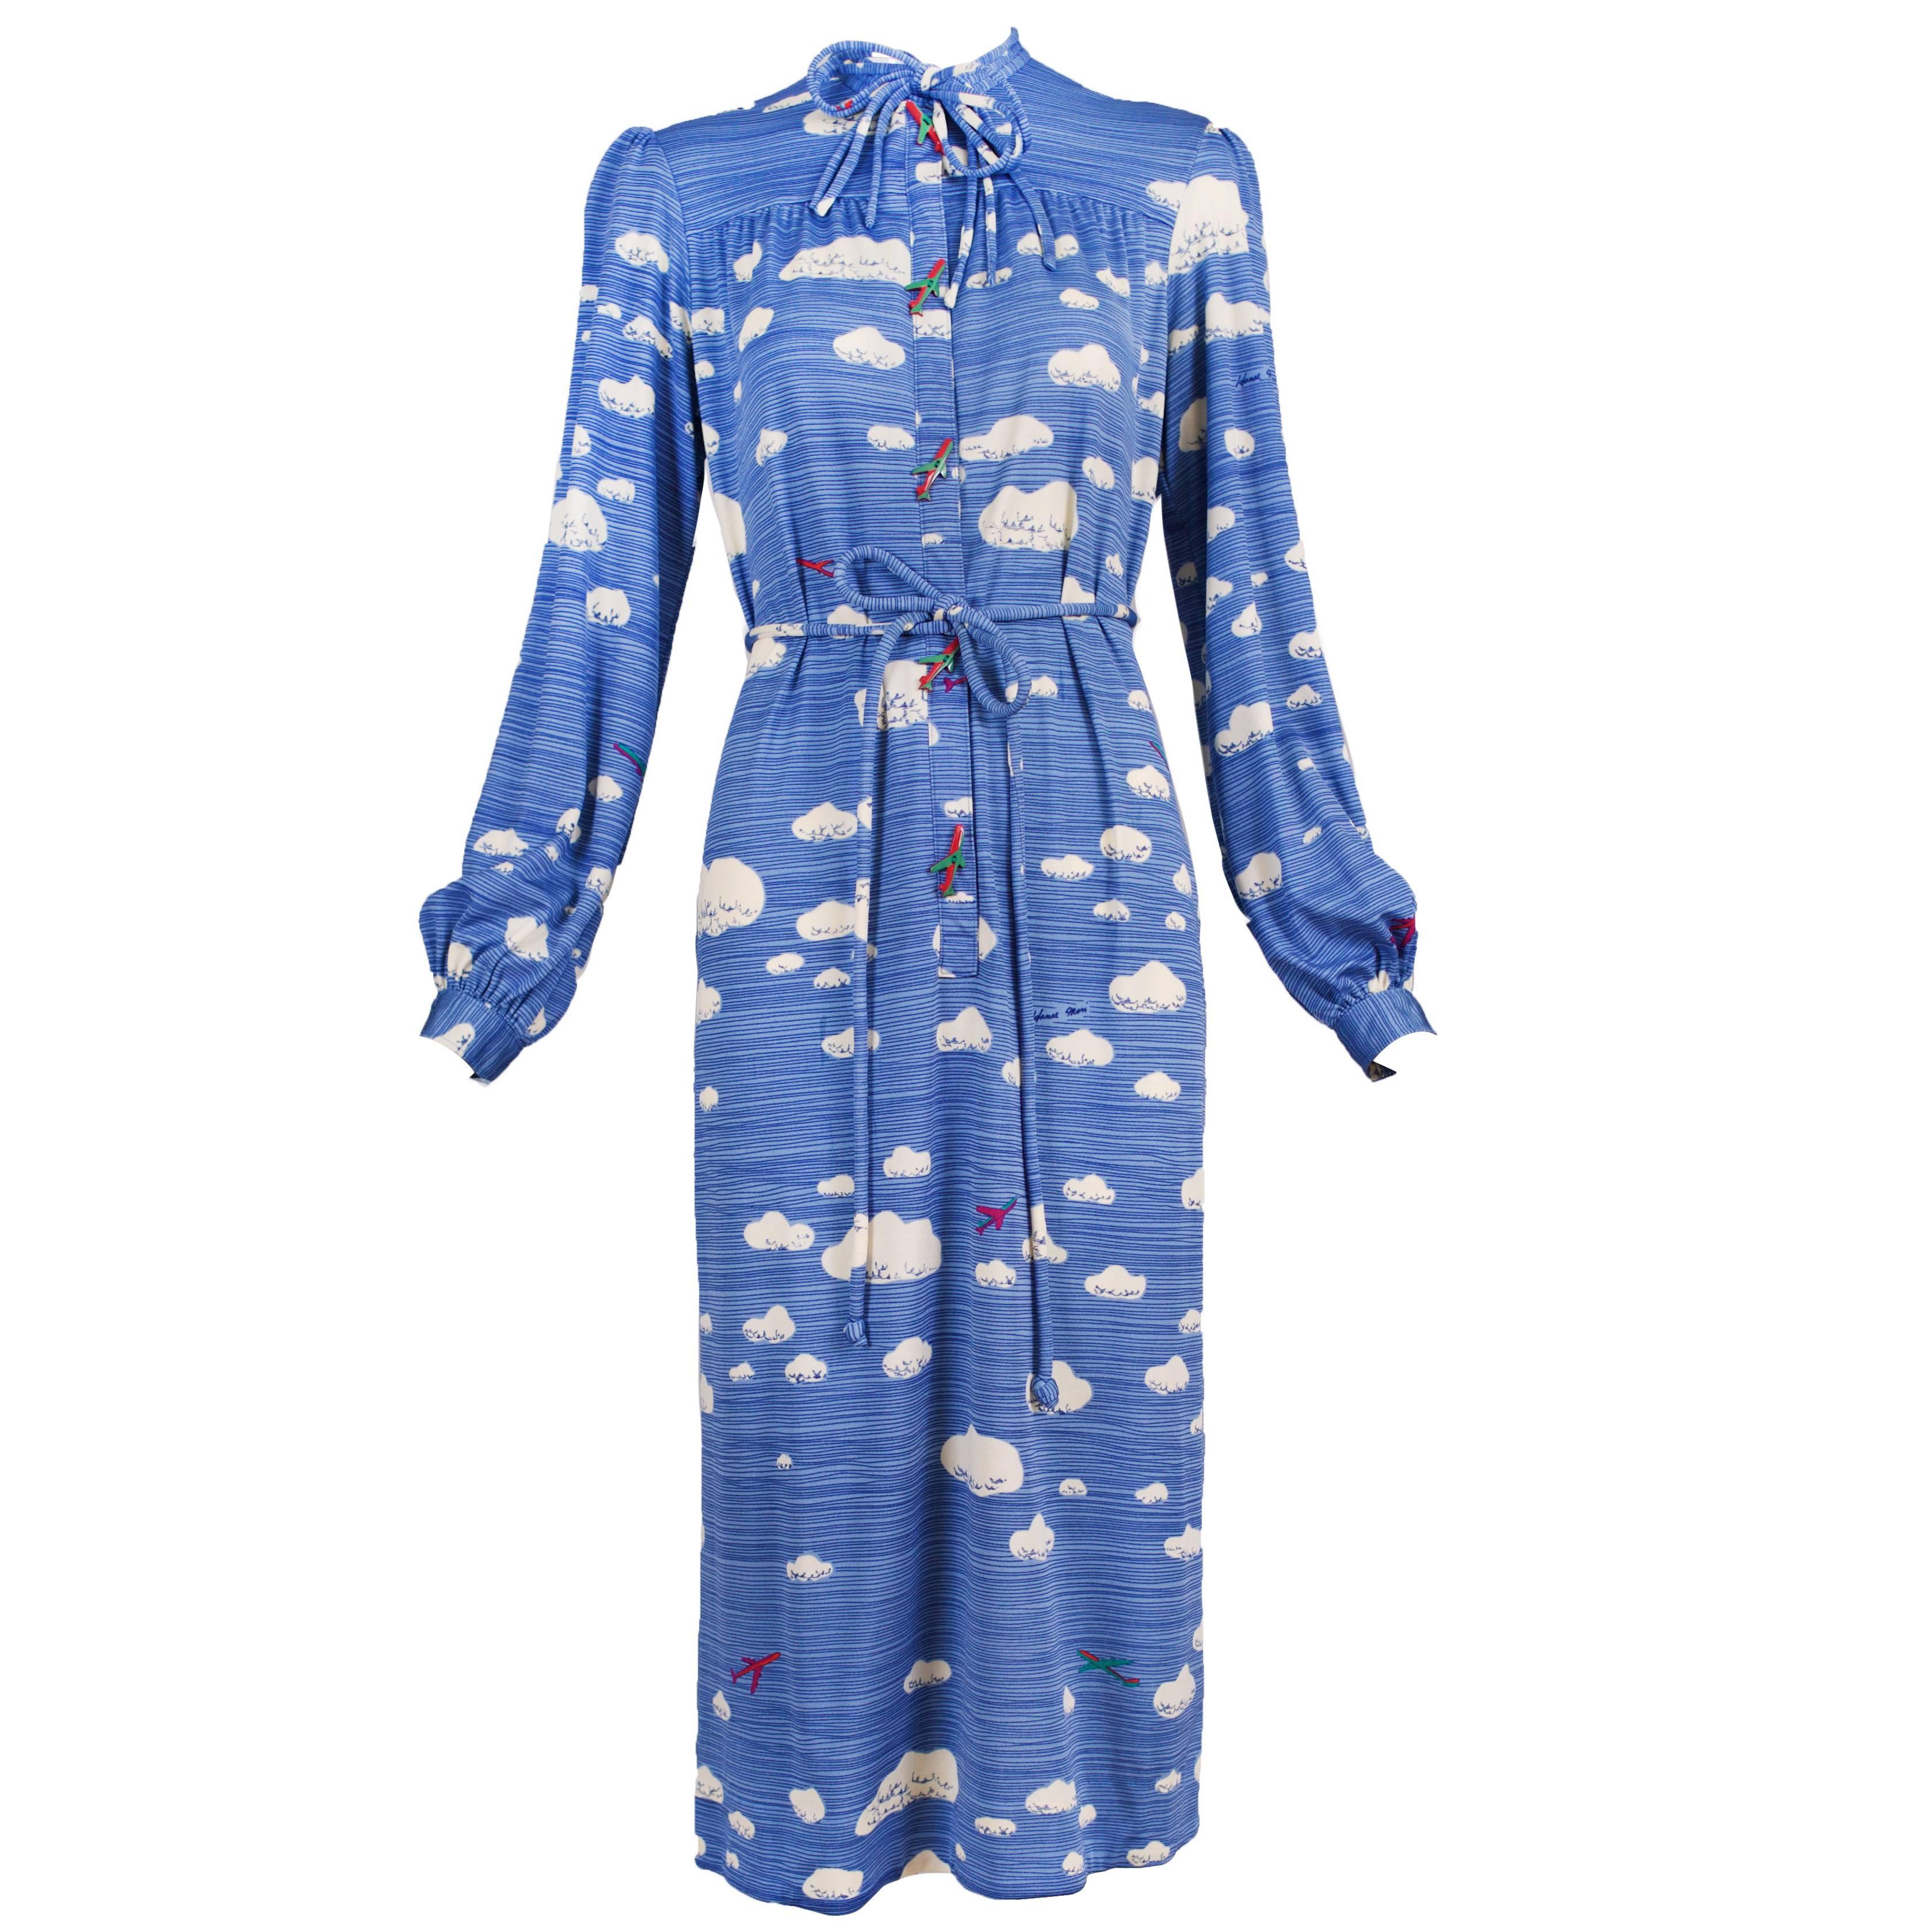 Hanae Mori Cloud & Airplane Novelty Print Day Dress w/Bakelite Airplane Buttons